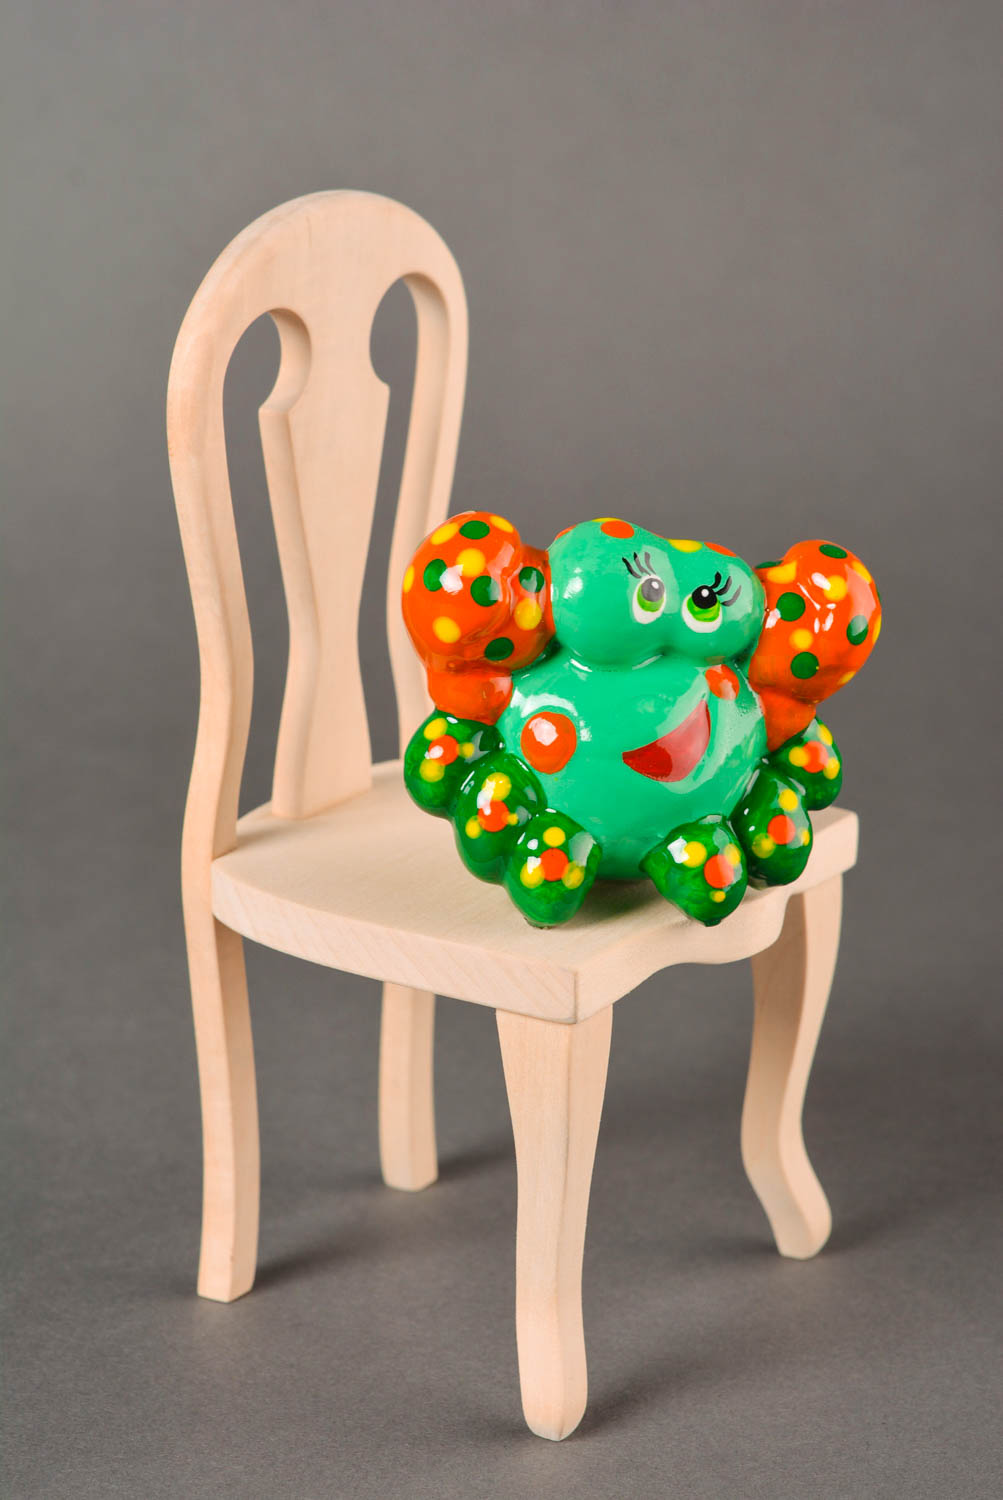 Handmade plaster figurine designer home decor gift for kid decorative use only photo 1